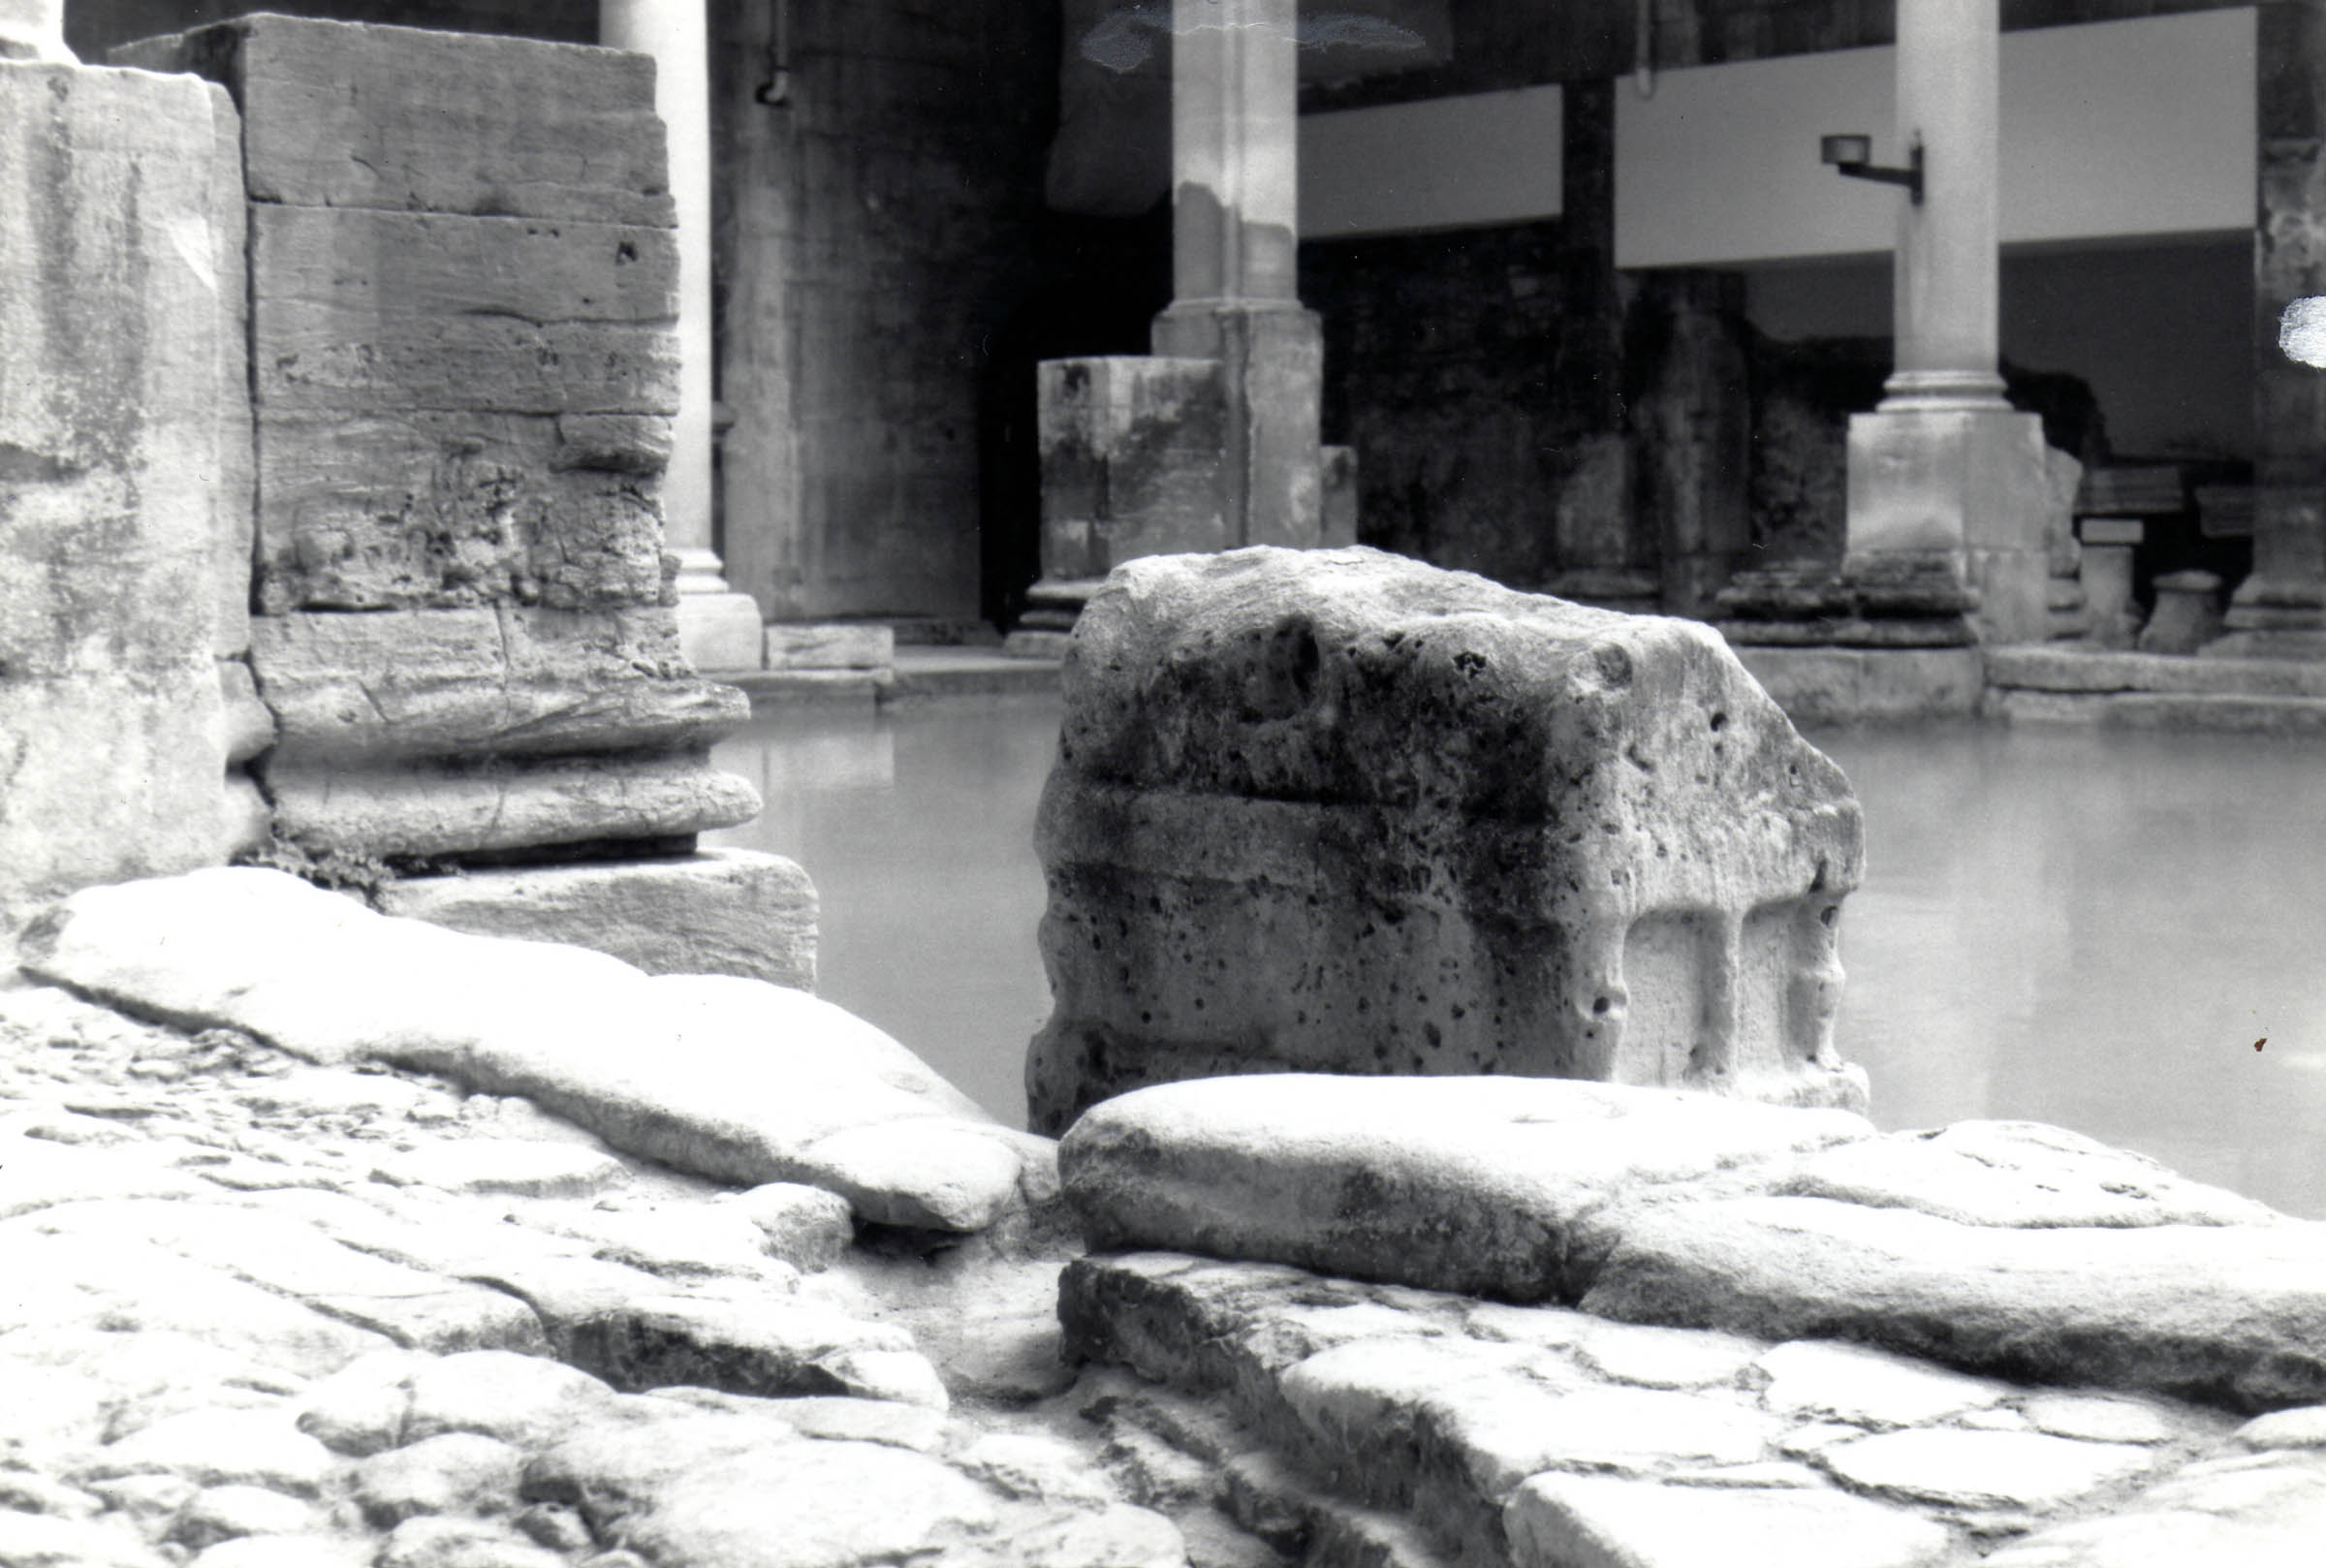 The Roman Baths, Bath, UK, 1997.